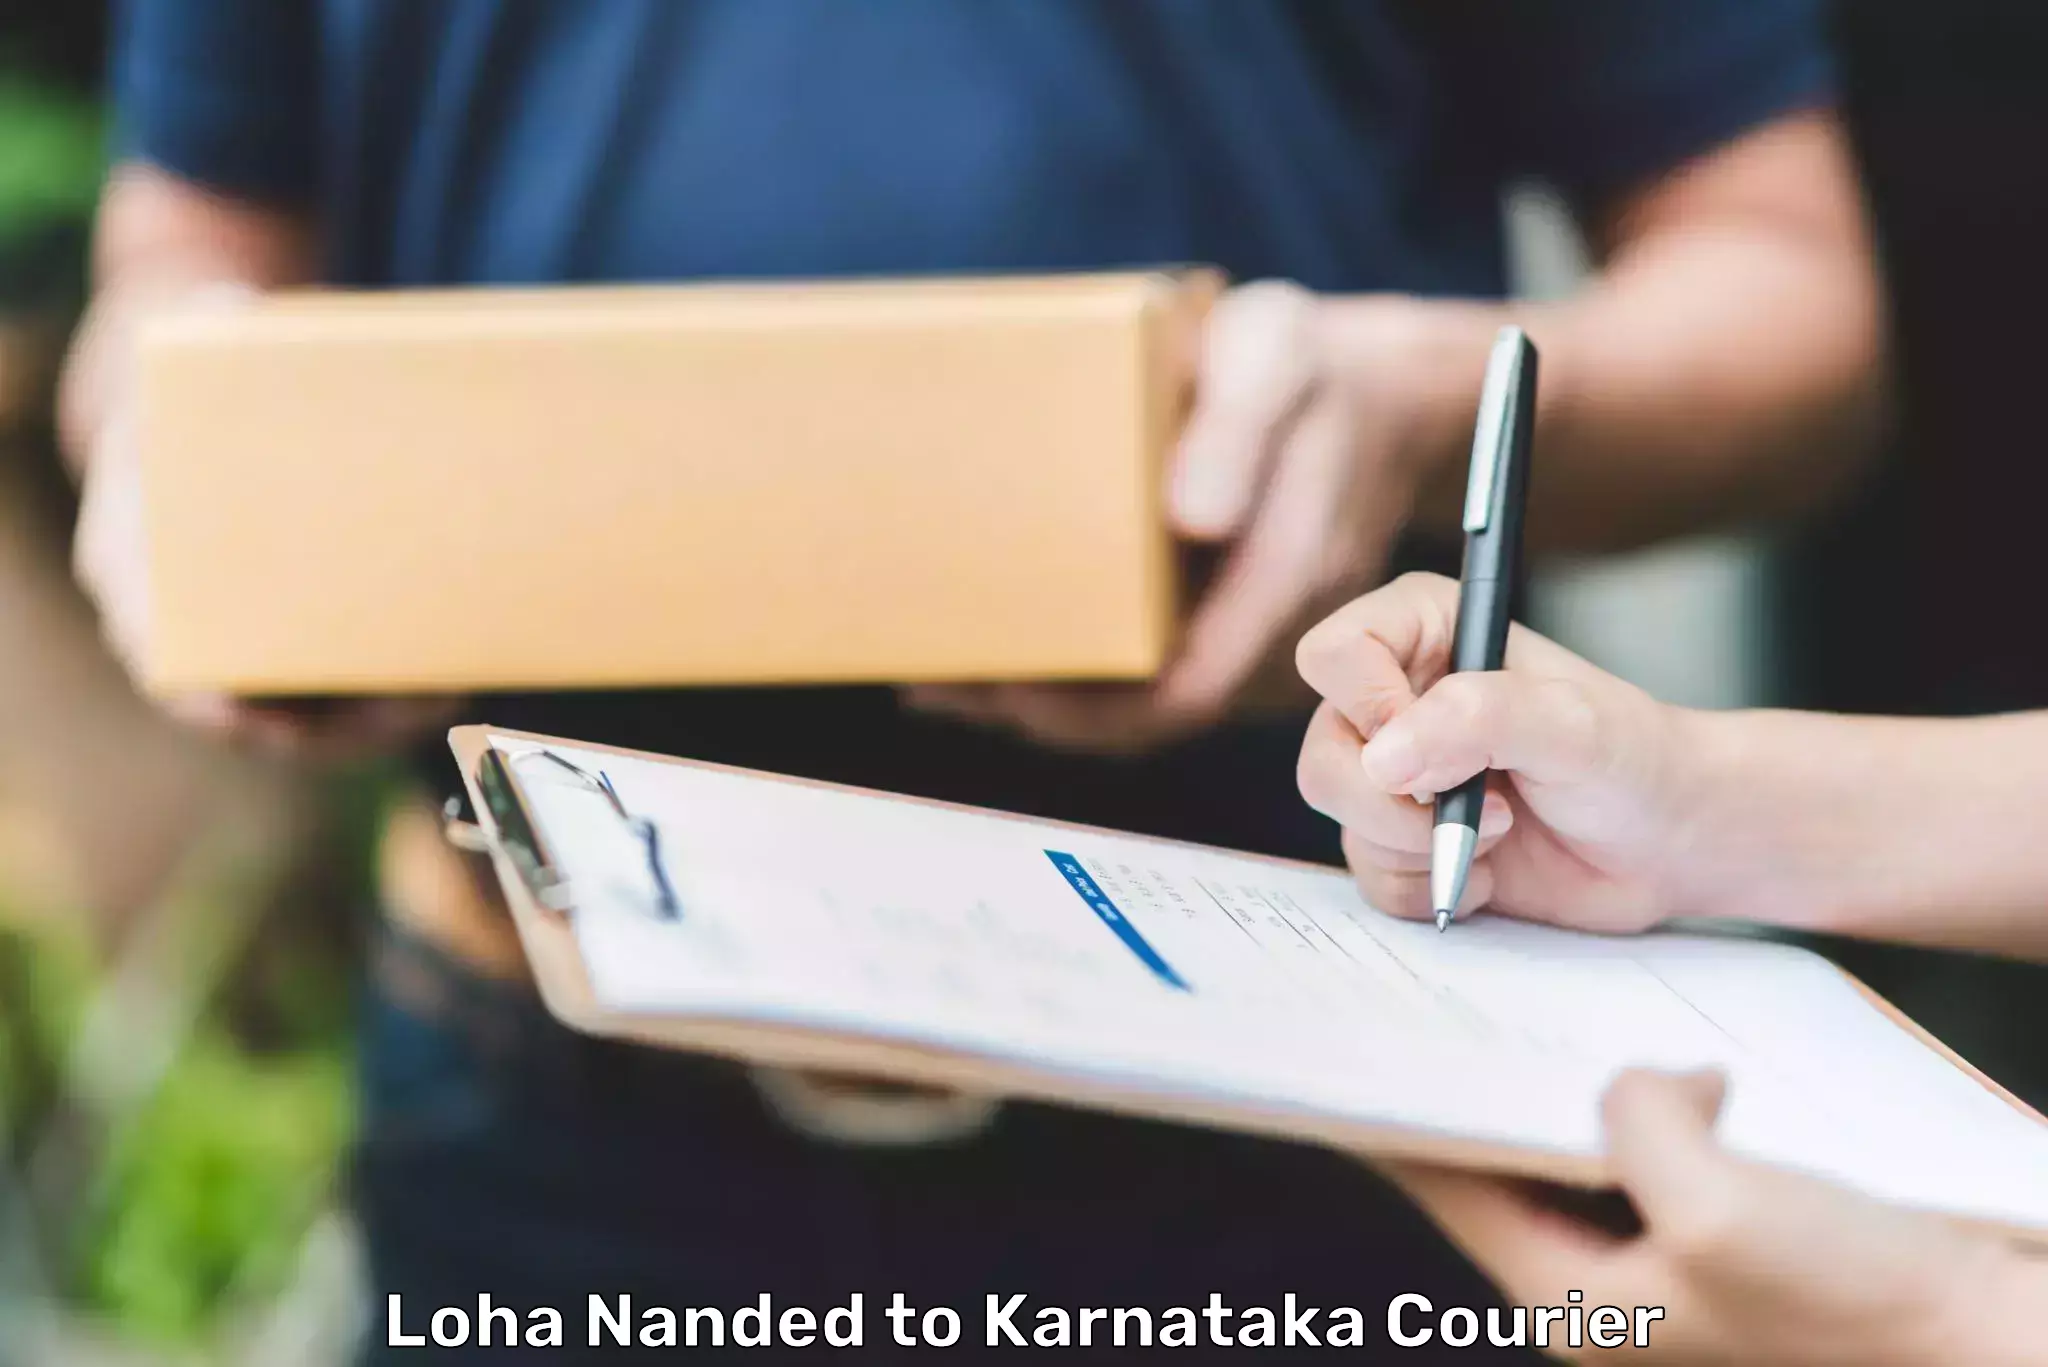 Global courier networks Loha Nanded to Karnataka